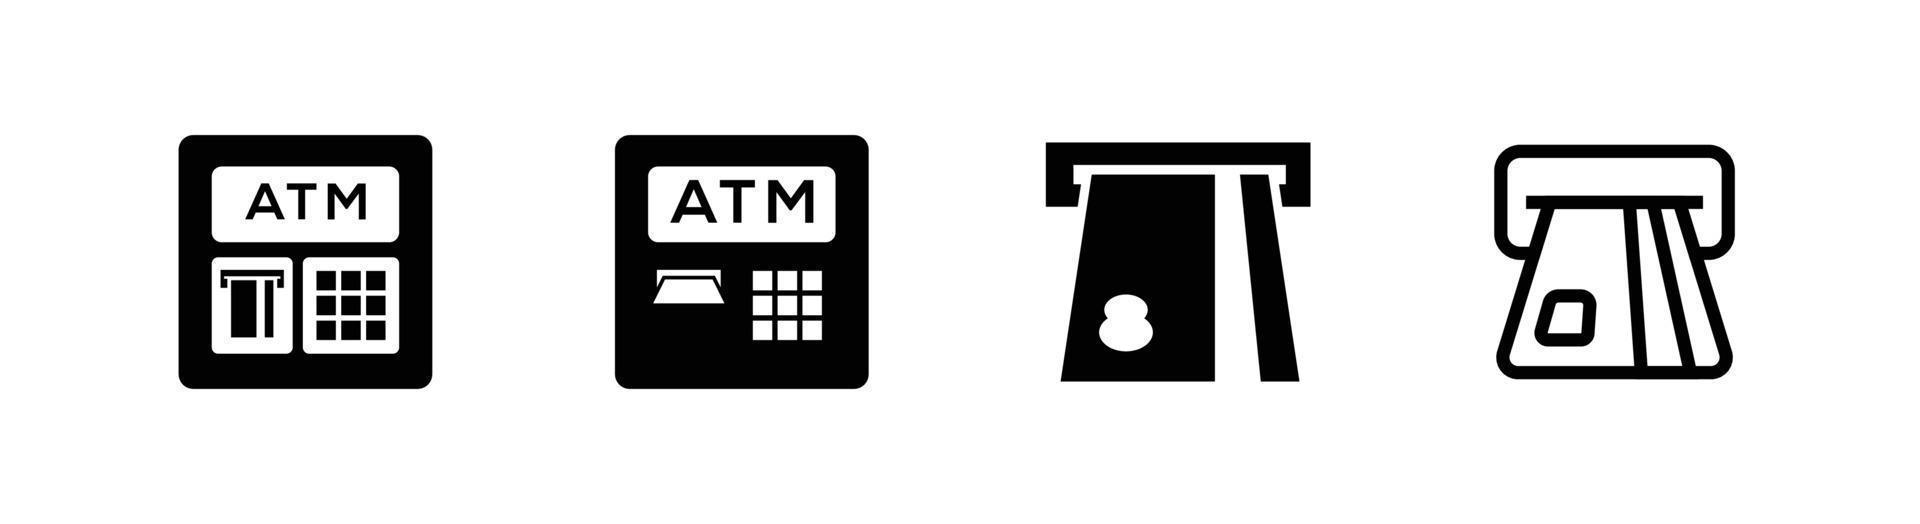 Bank ATM cash symbol, cash machine icon vector